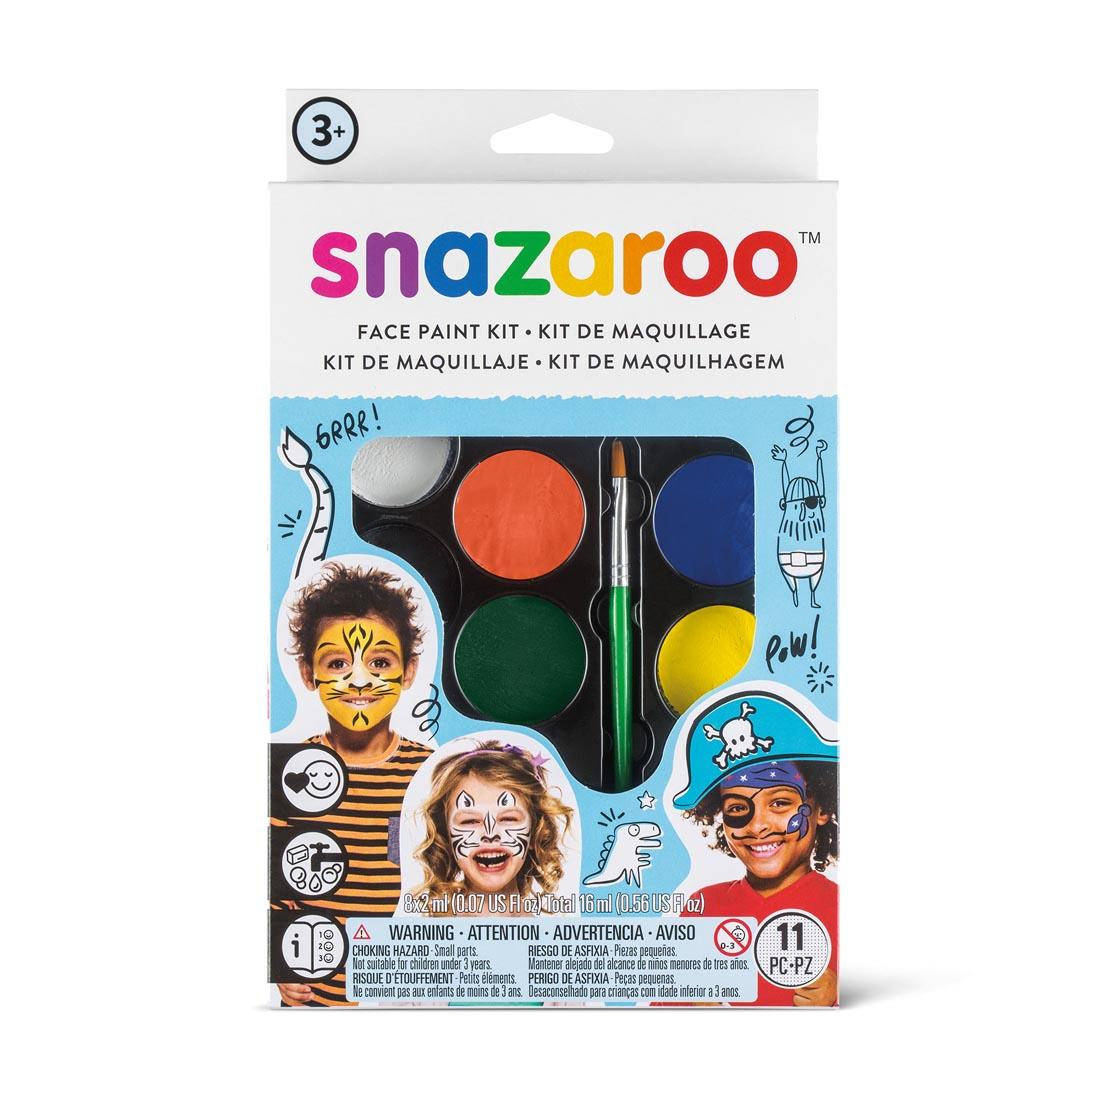 Blue box of Snazaroo Face Paint Kit